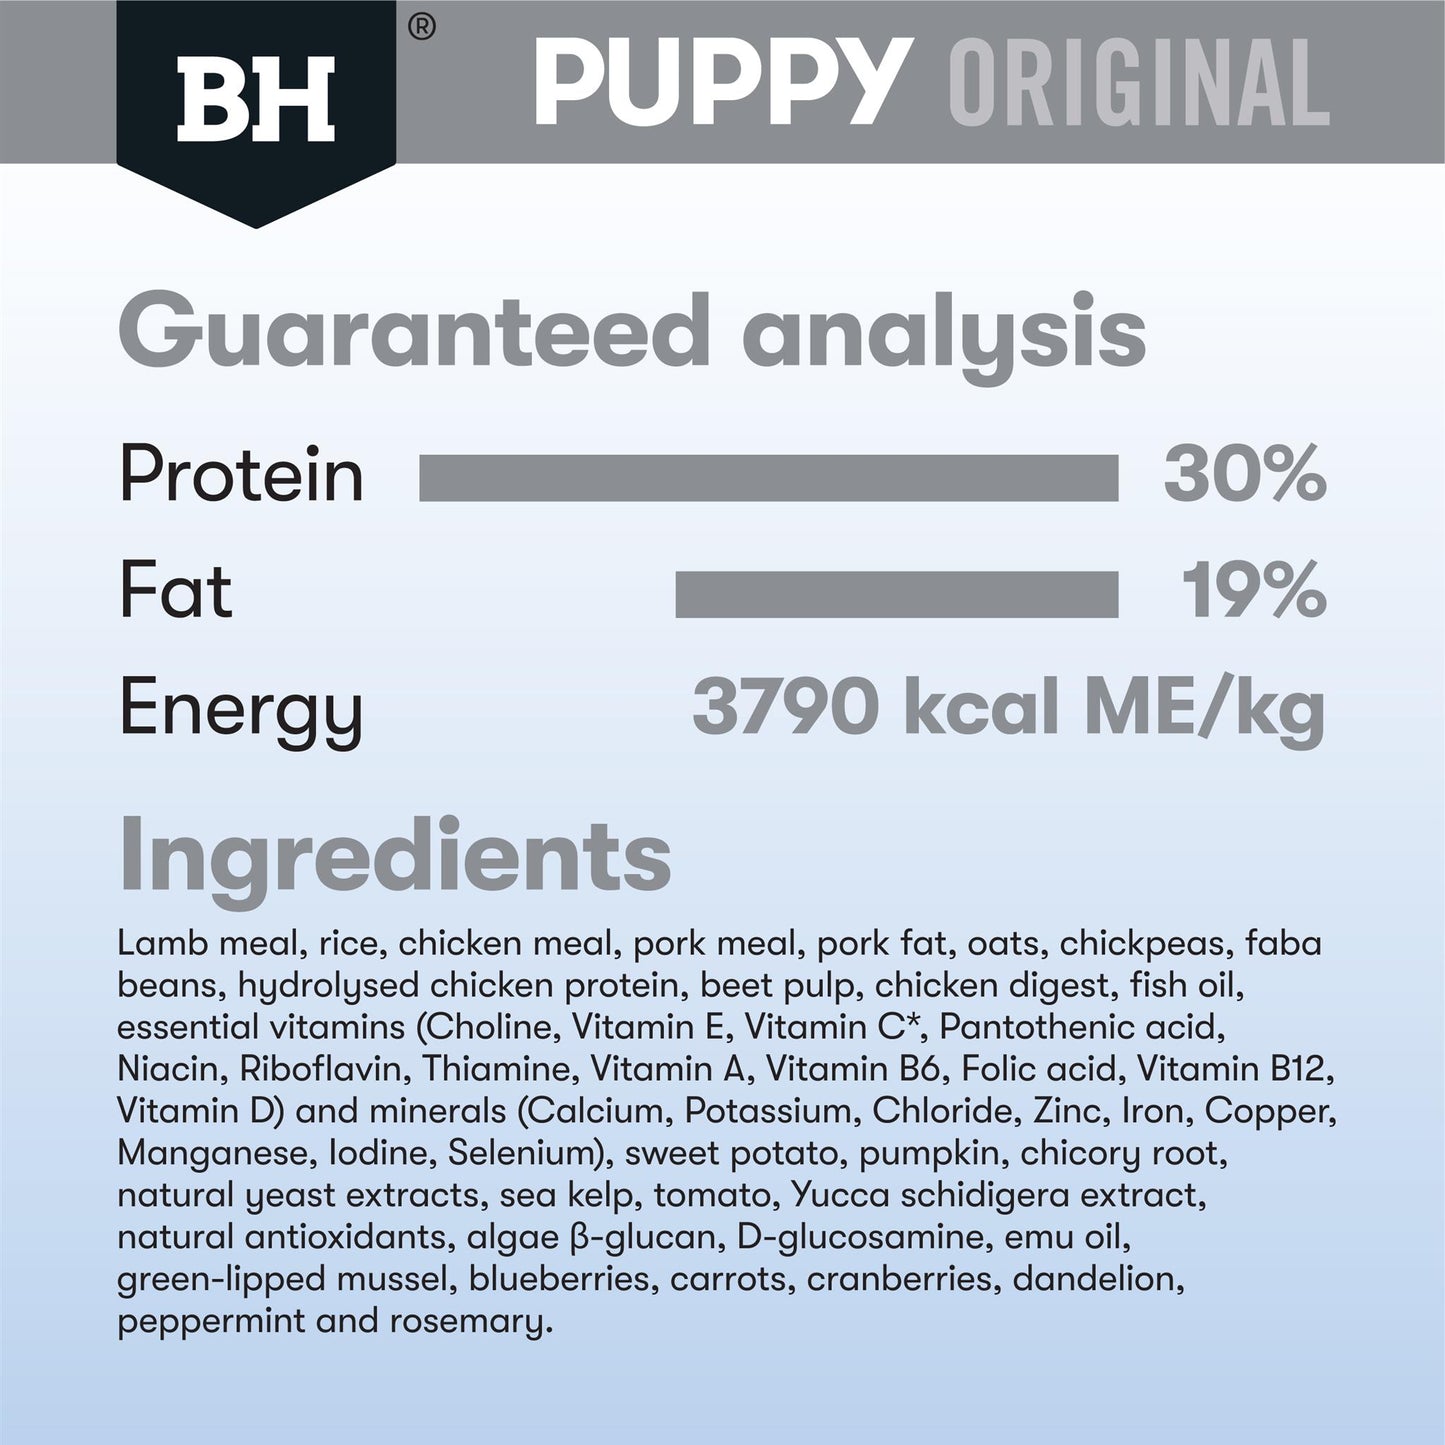 BlackHawk: Puppy Medium Breed Lamb & Rice